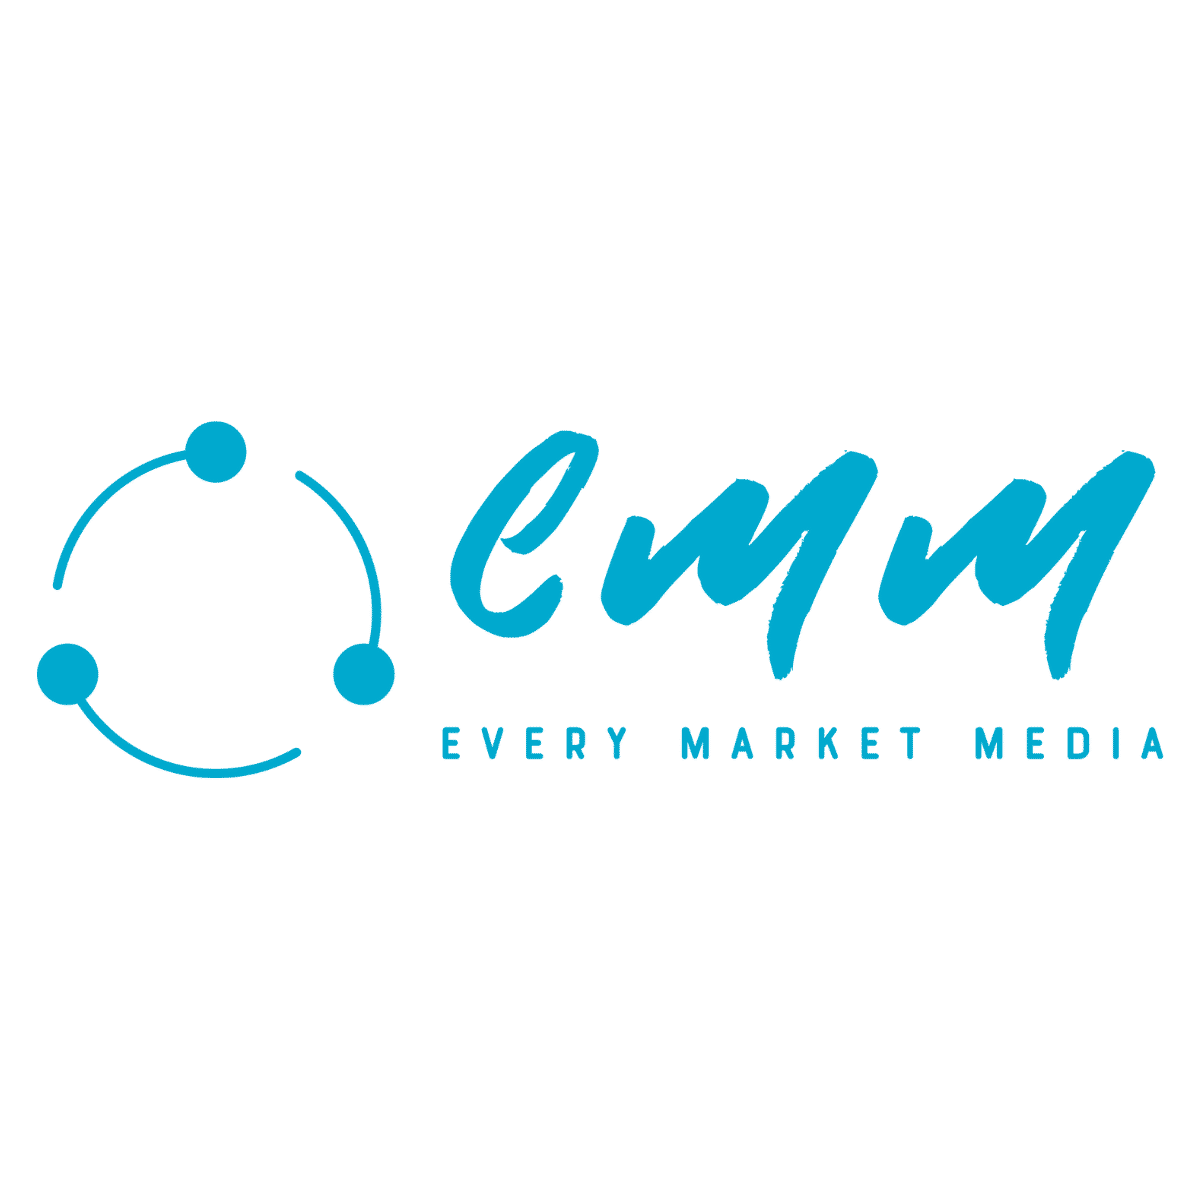 Every Market Media - Crunchbase Company Profile & Funding